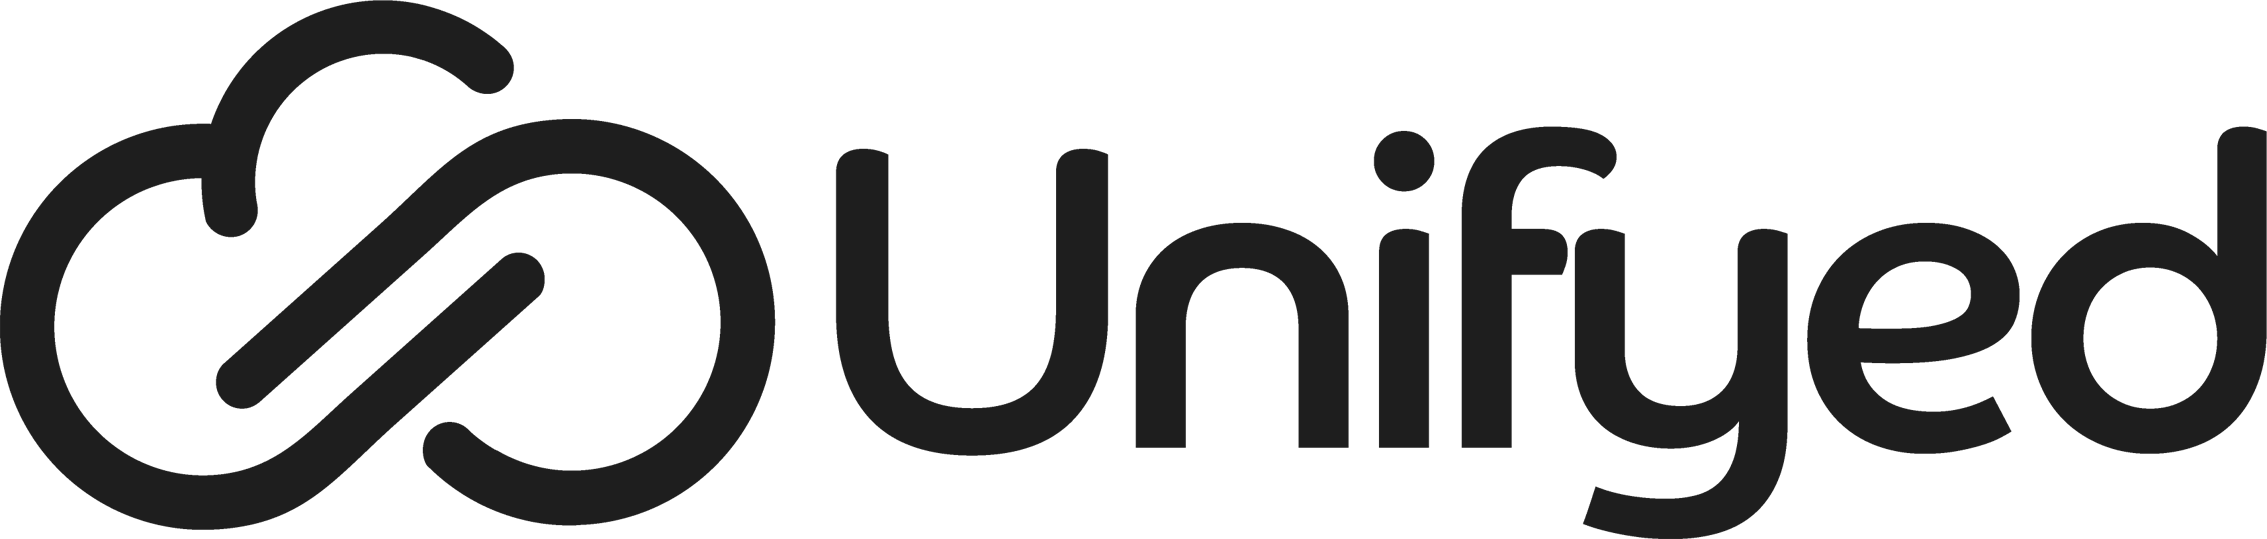 unifyed_Blk_logo